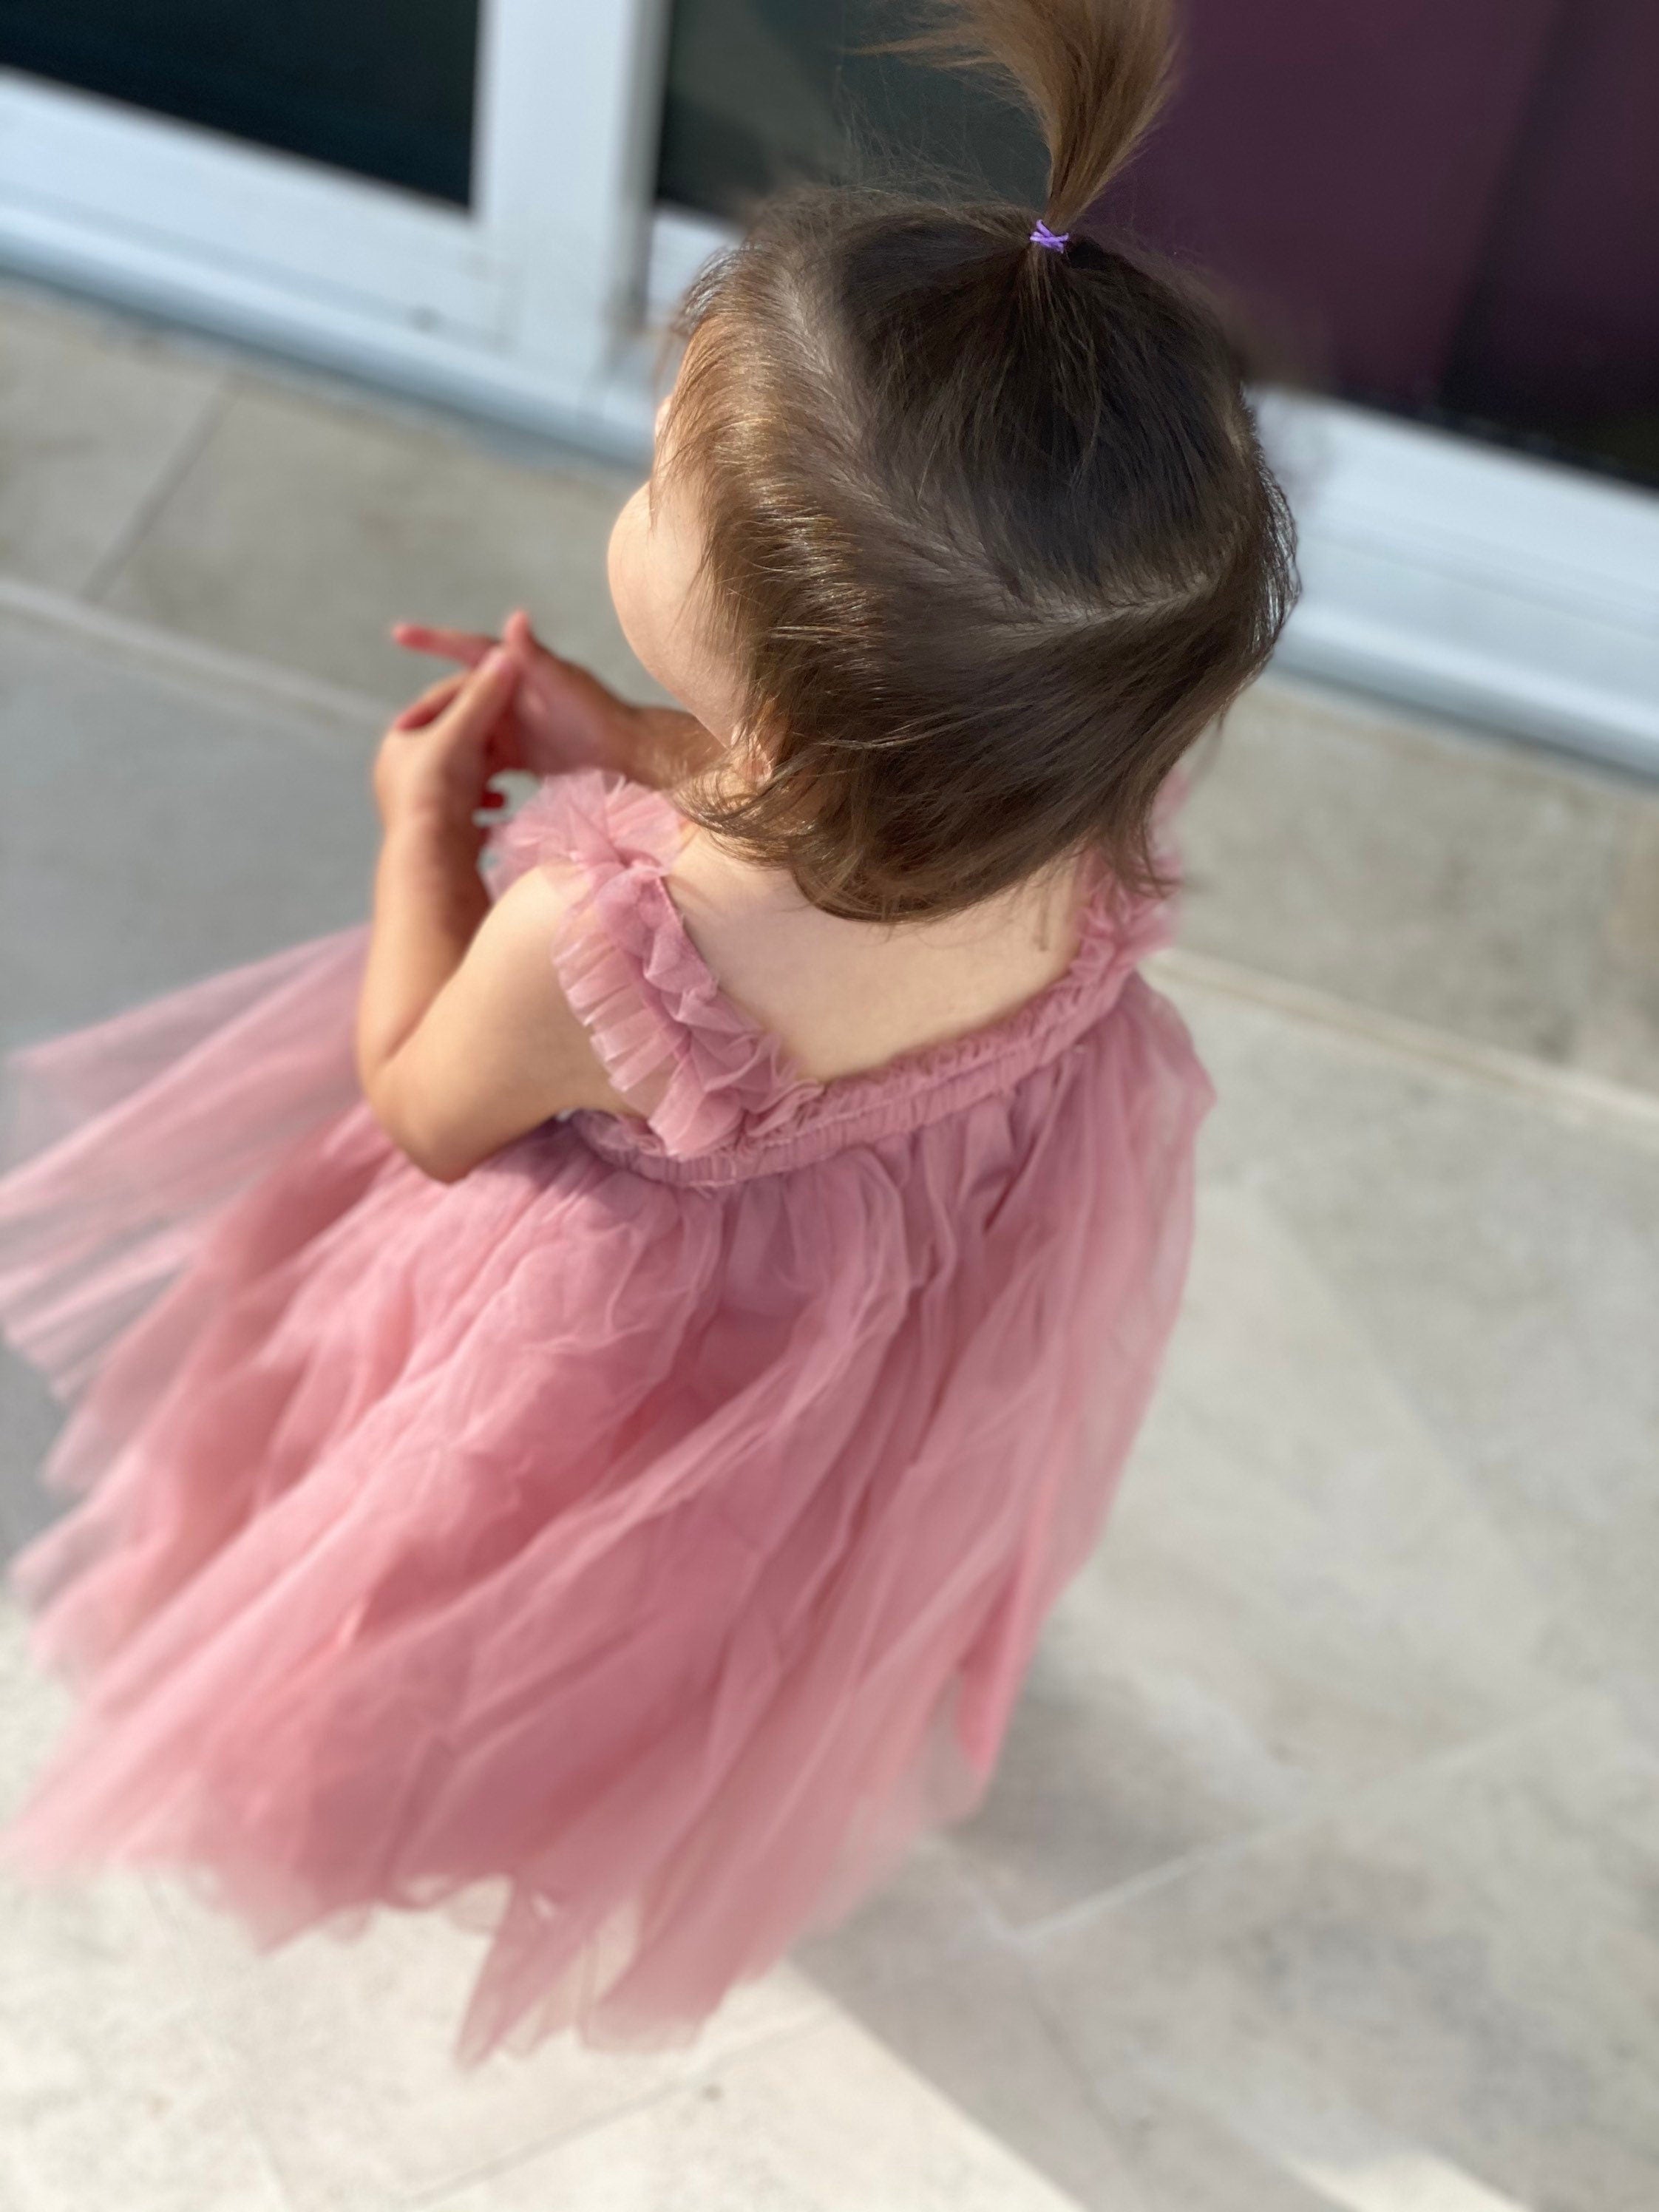 Plain Dusty Pink Tulle Birthday Dress